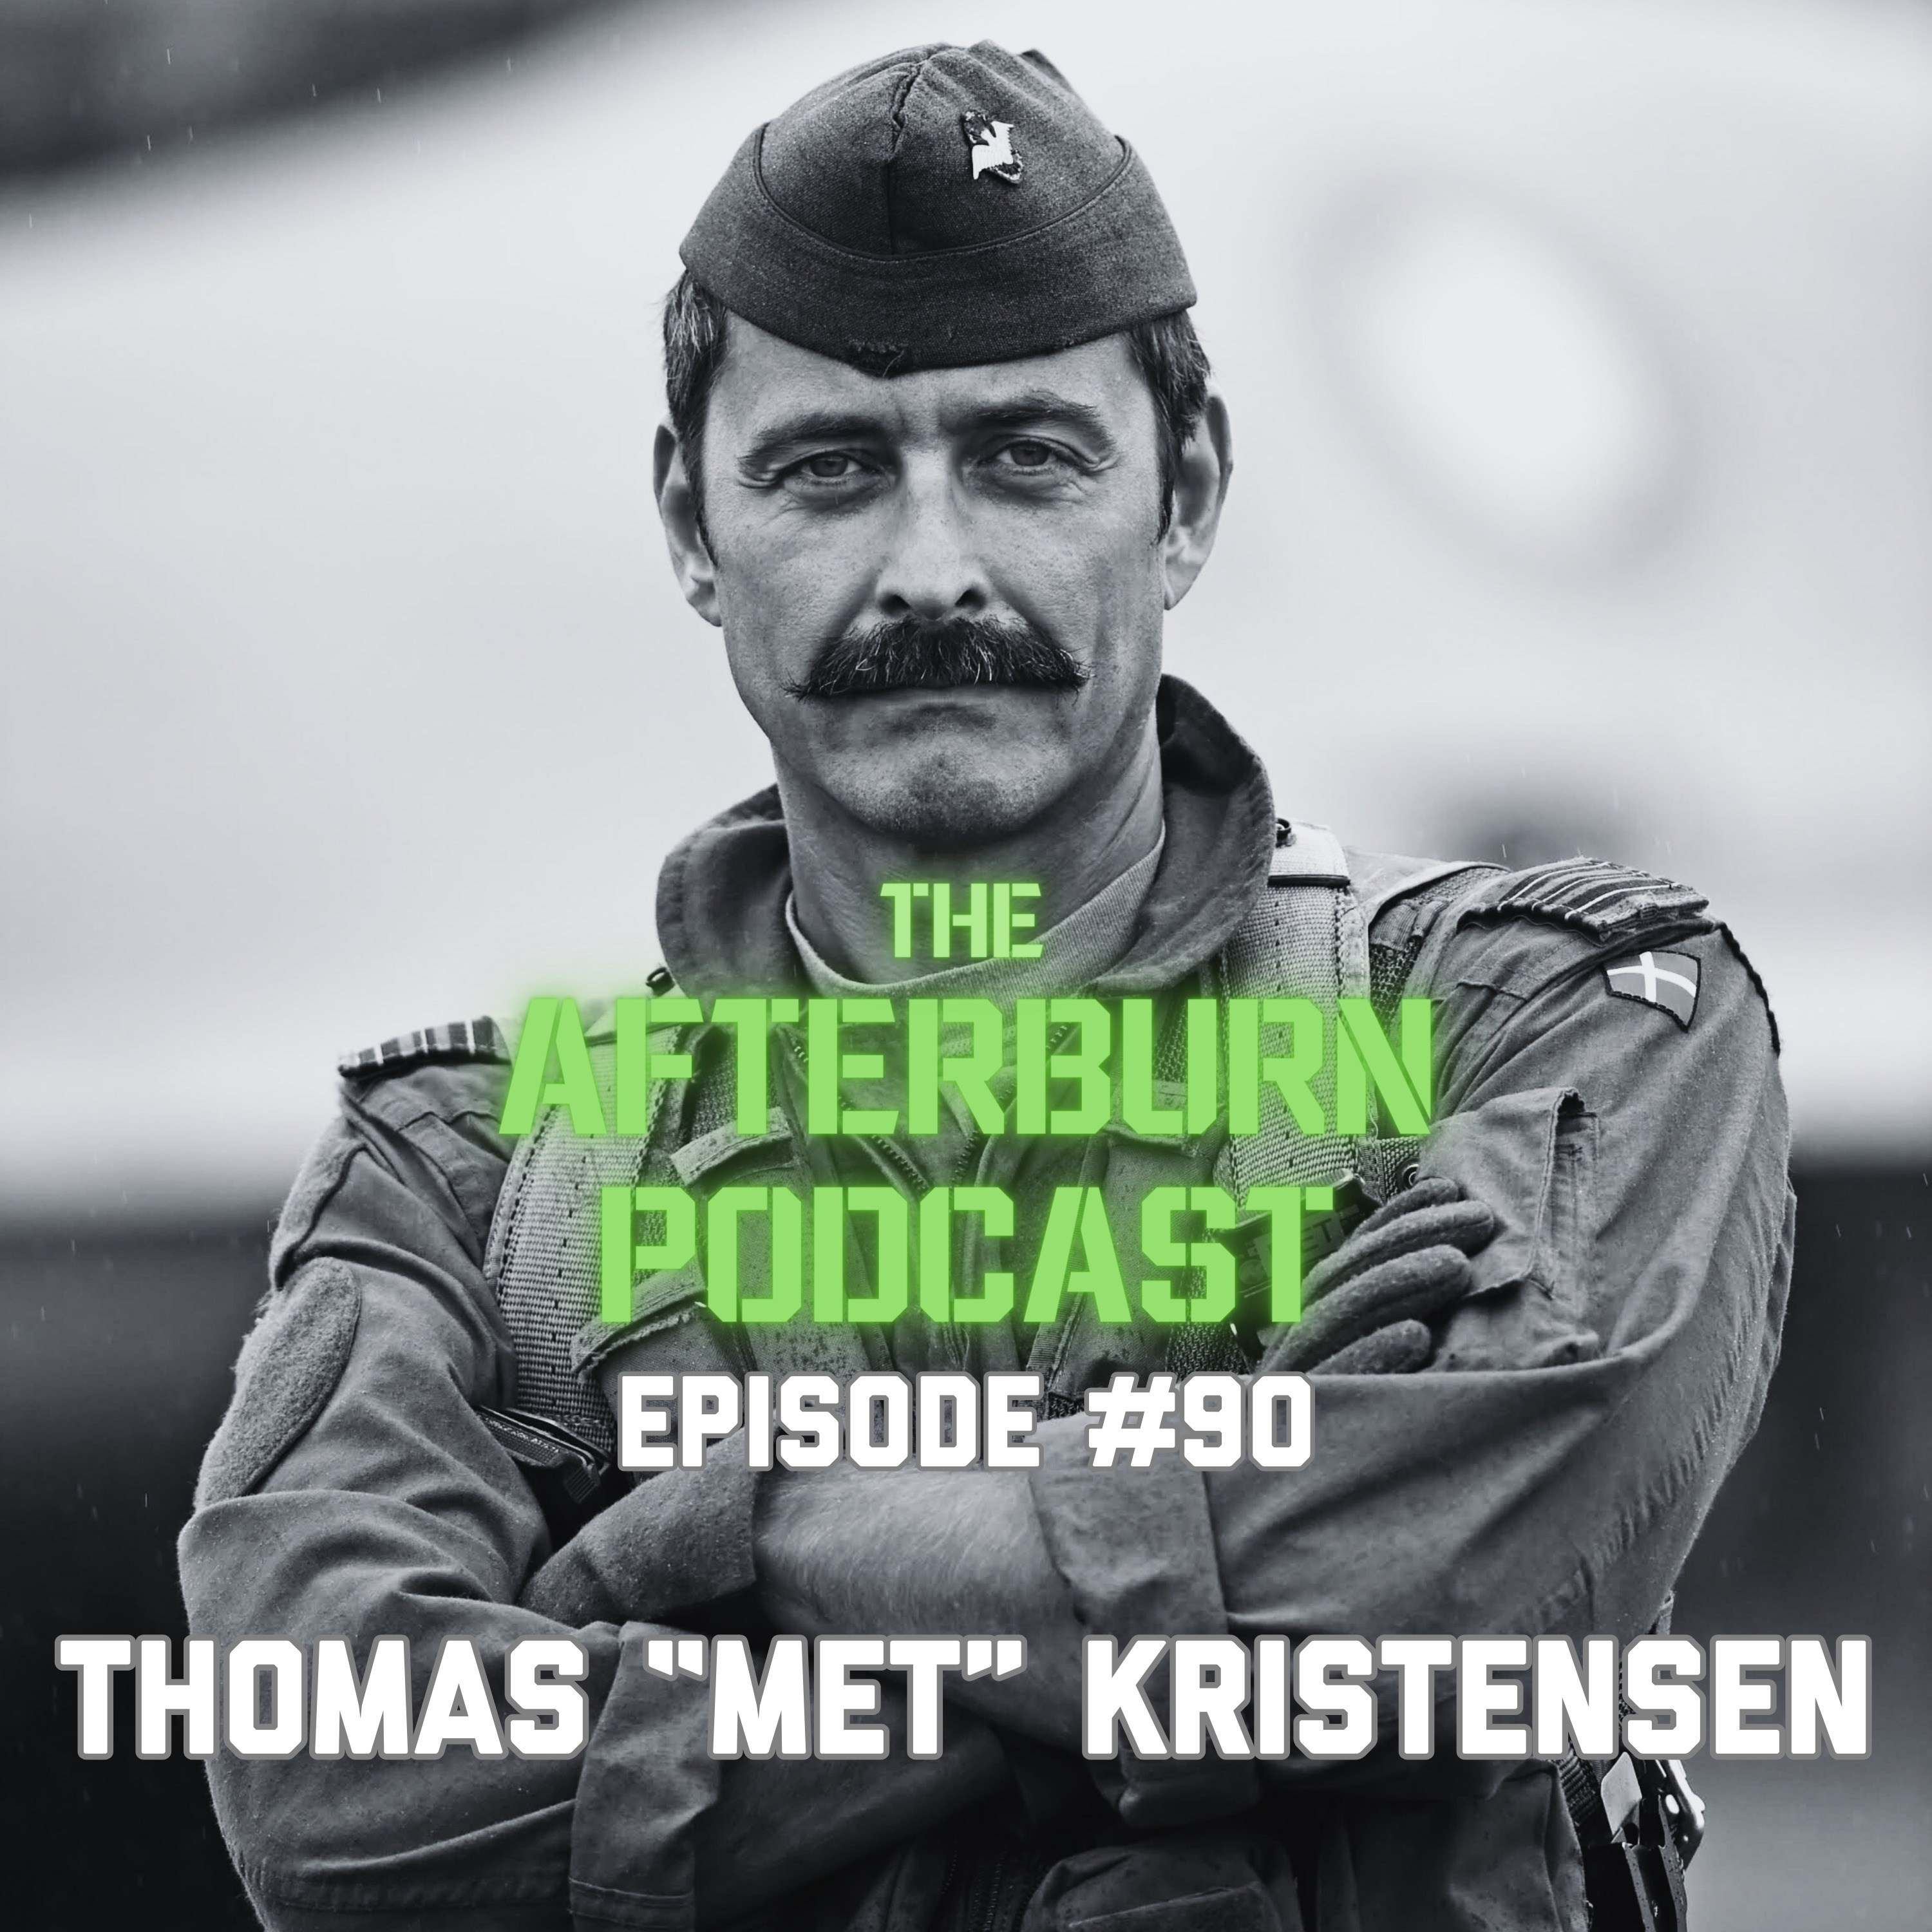 #90 Thomas “MET” Kristensen | Danish F-16 Pilot